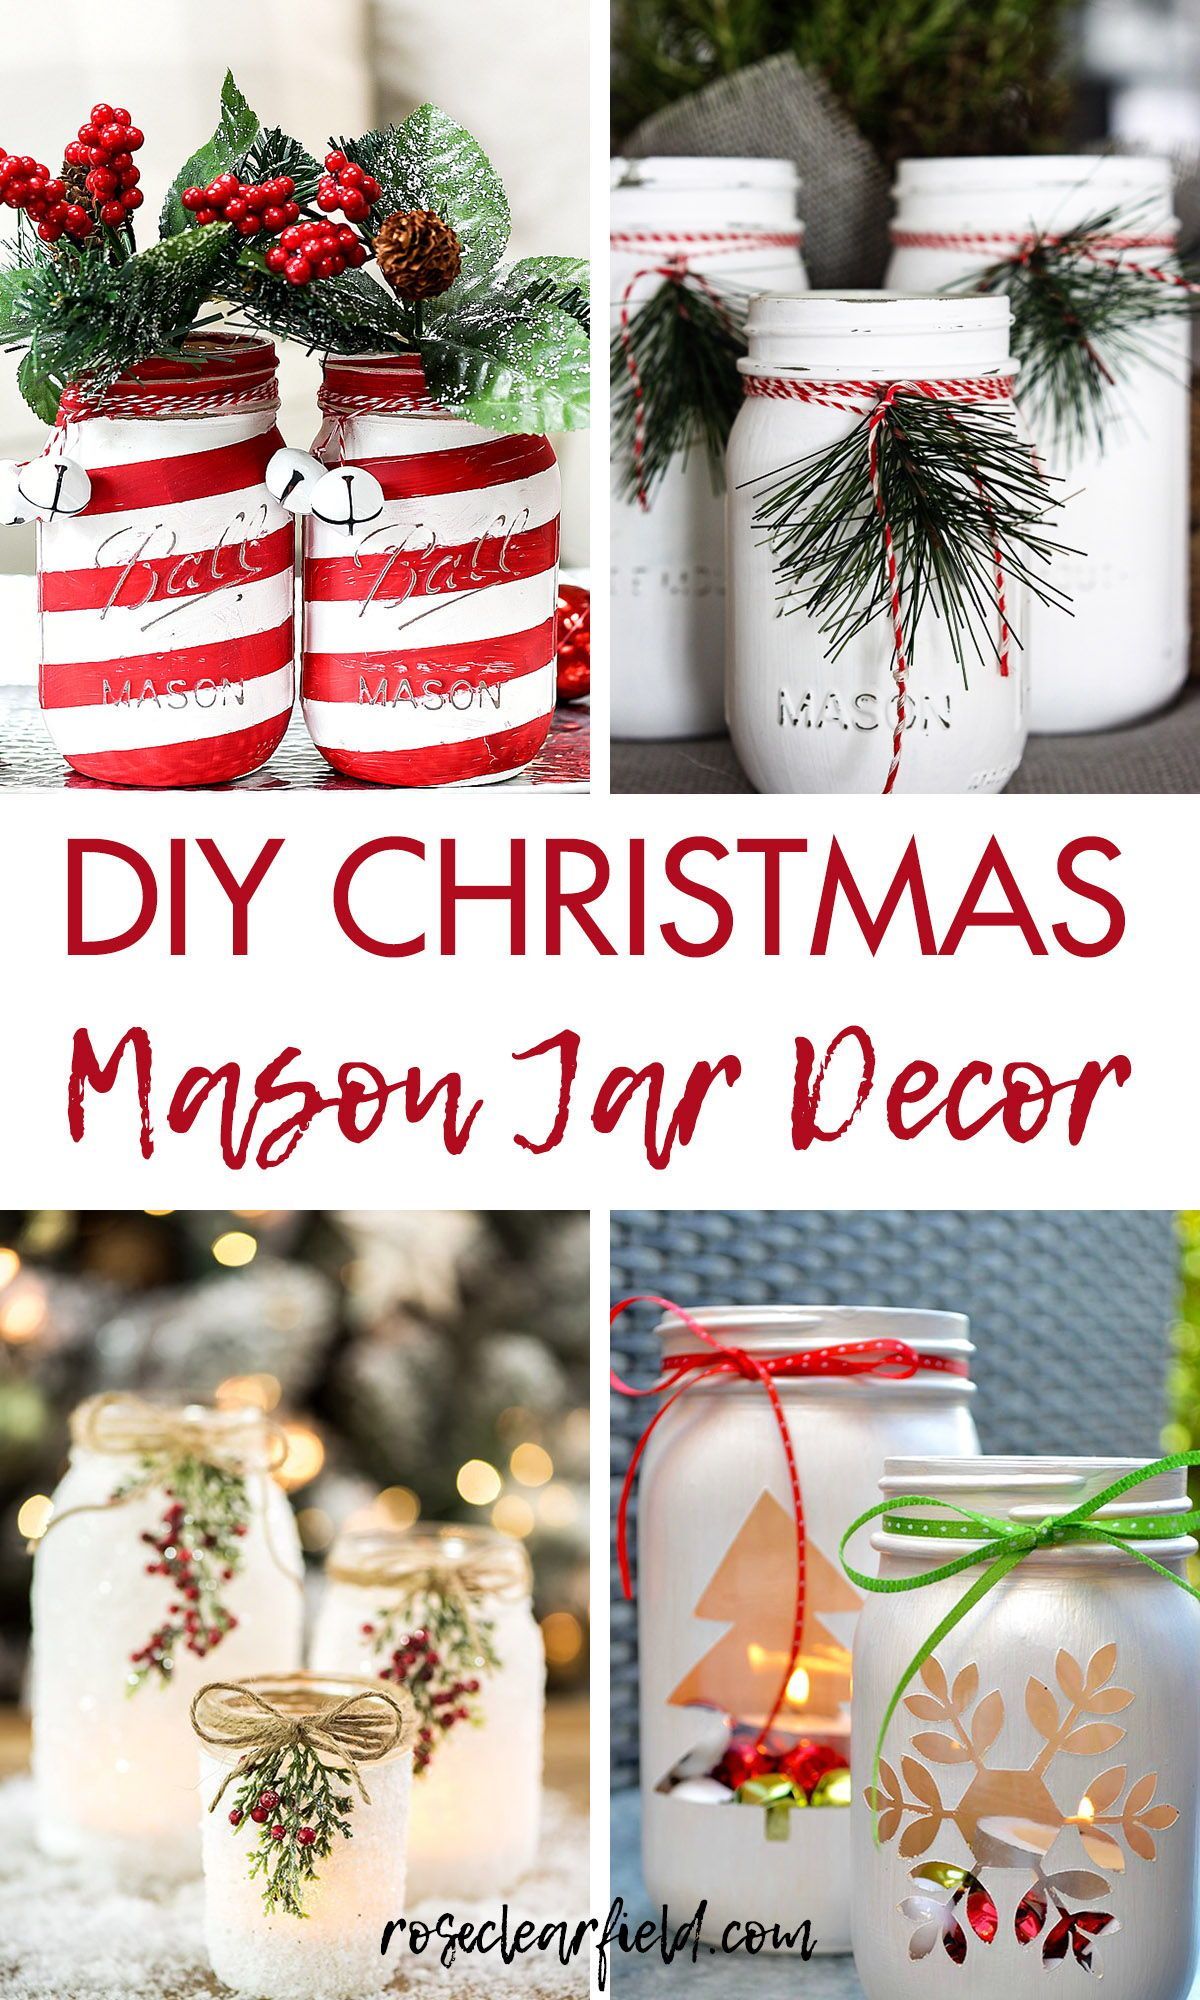 DIY Christmas Mason Jar Decor • Rose Clearfield - DIY Christmas Mason Jar Decor • Rose Clearfield -   17 diy Christmas mason jars ideas